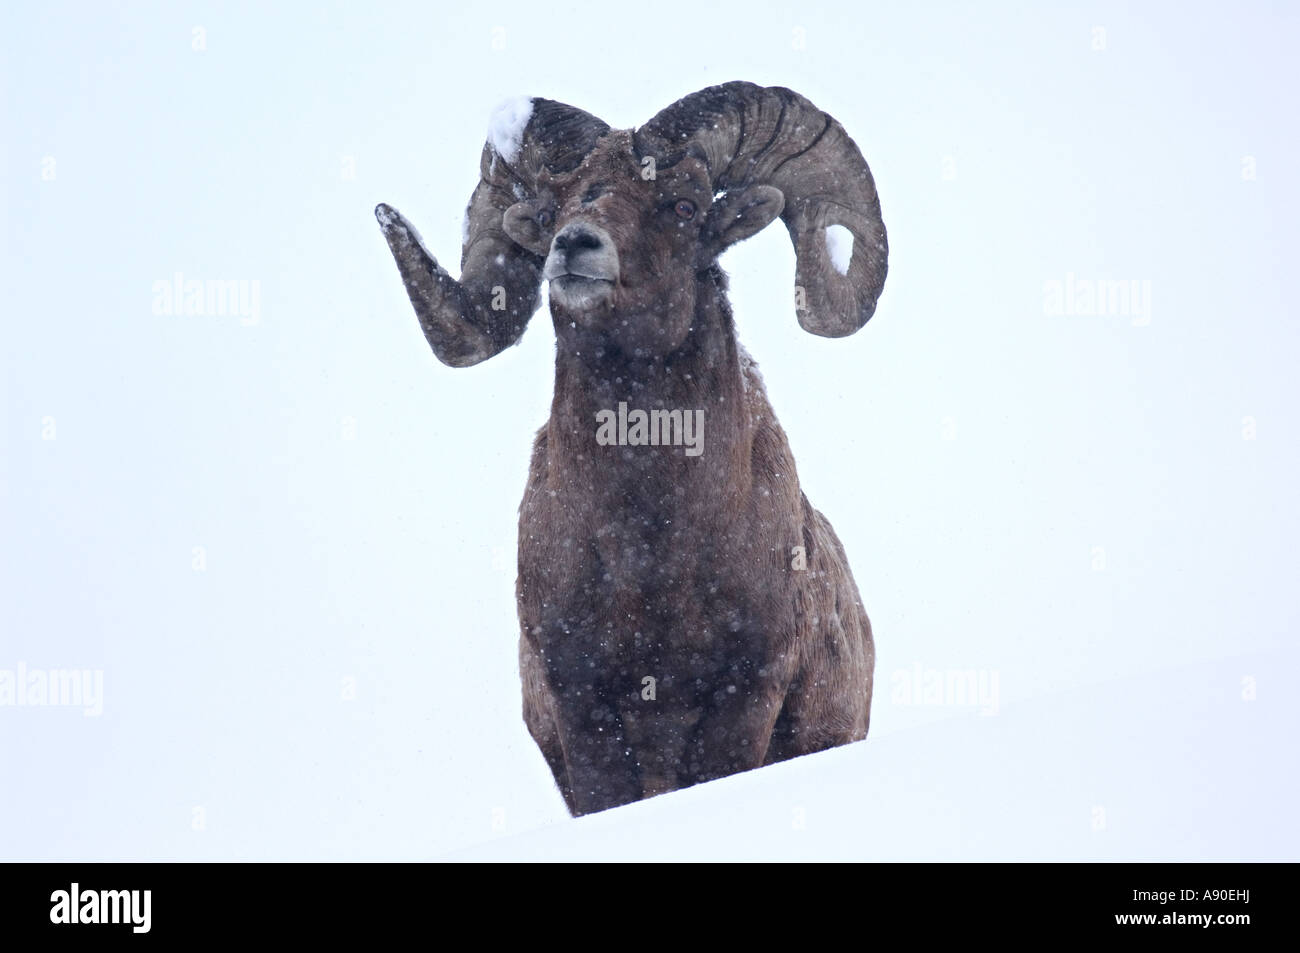 A Bighorn Sheep standing Stock Photo